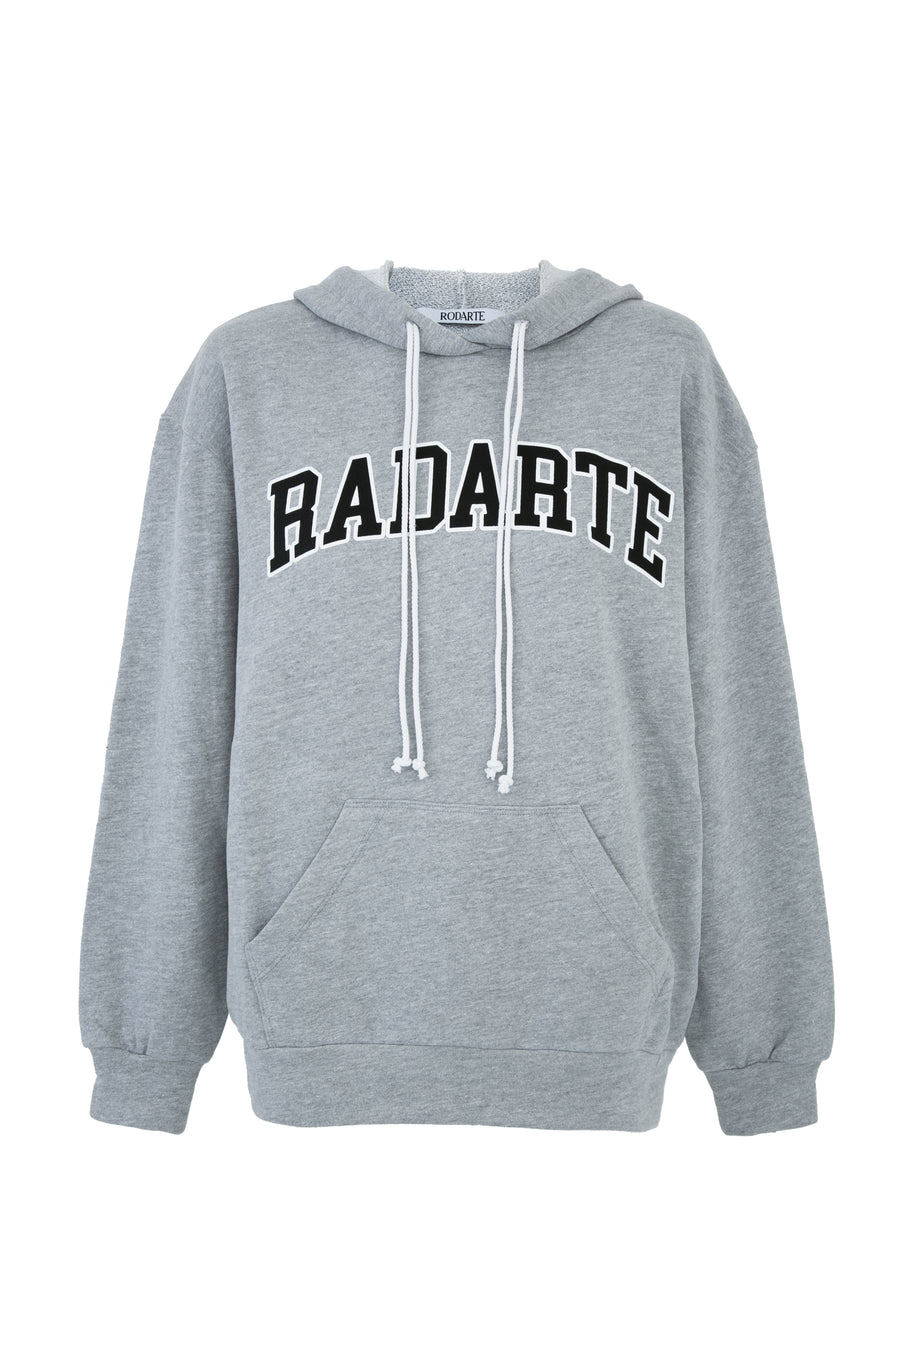 Radarte Collegiate Logo Hoodie